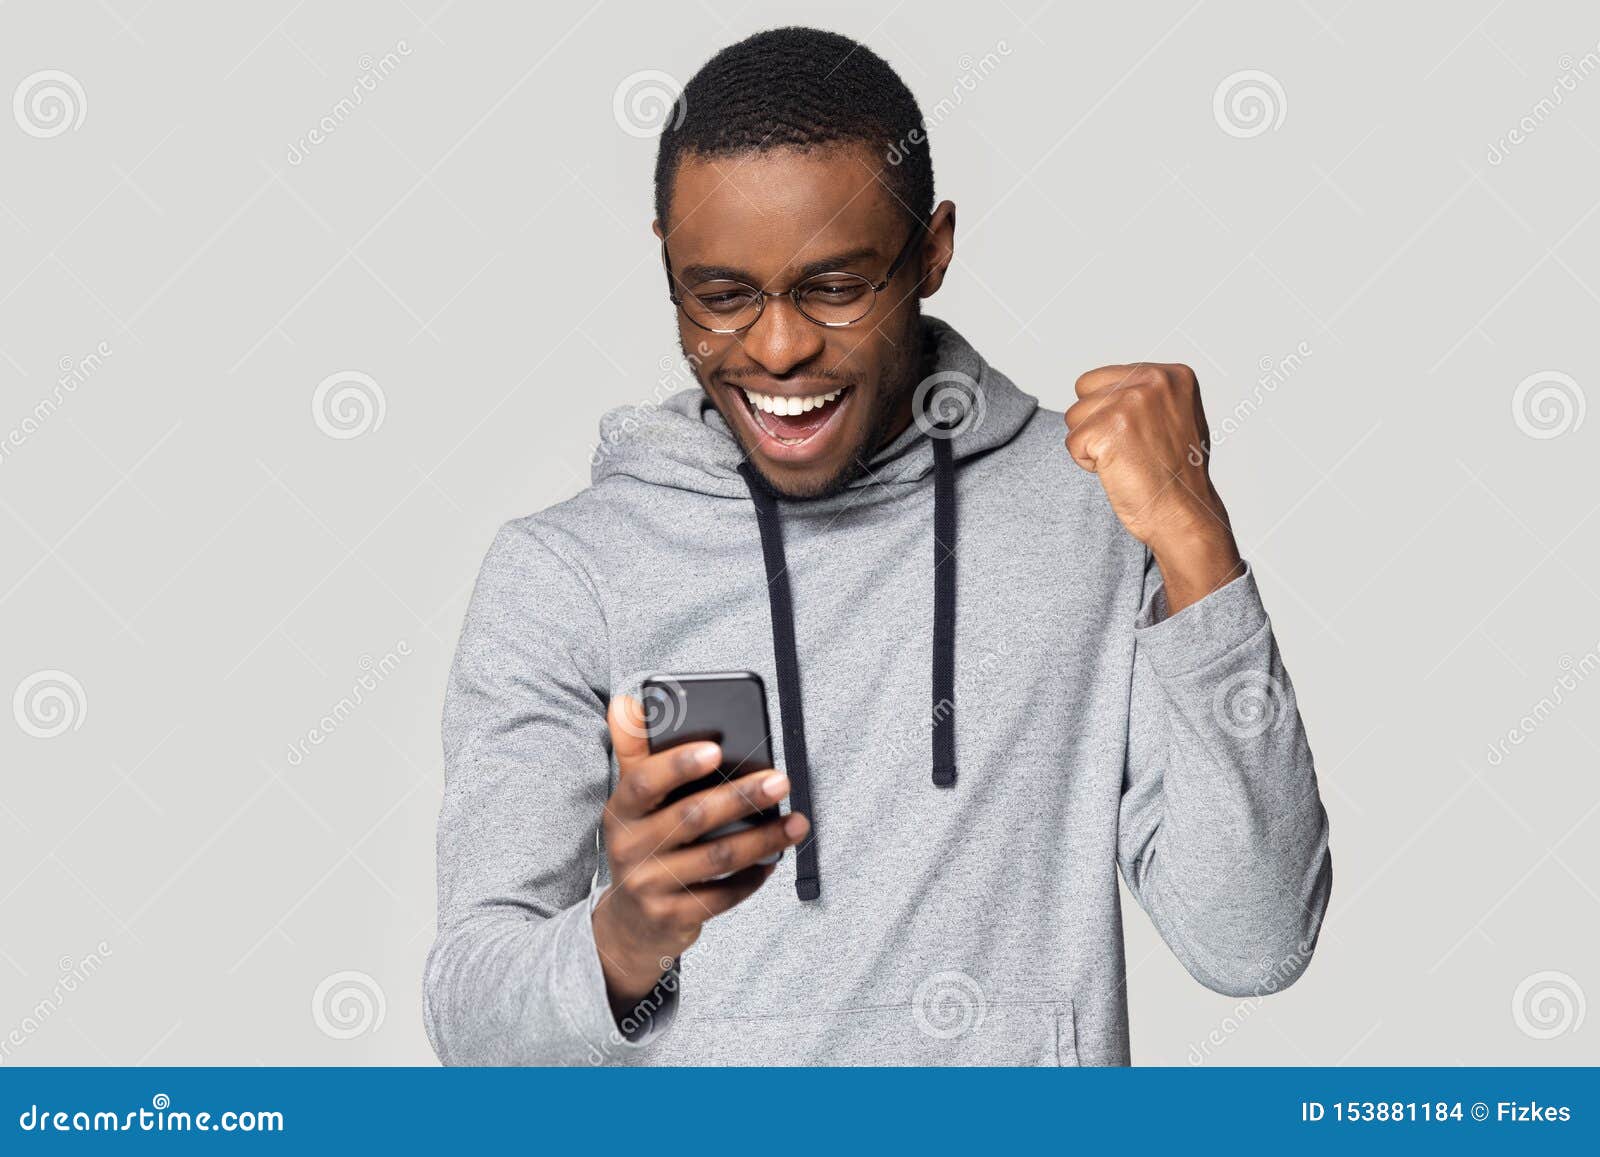 excited black man feel overjoyed reading good news on cellphone